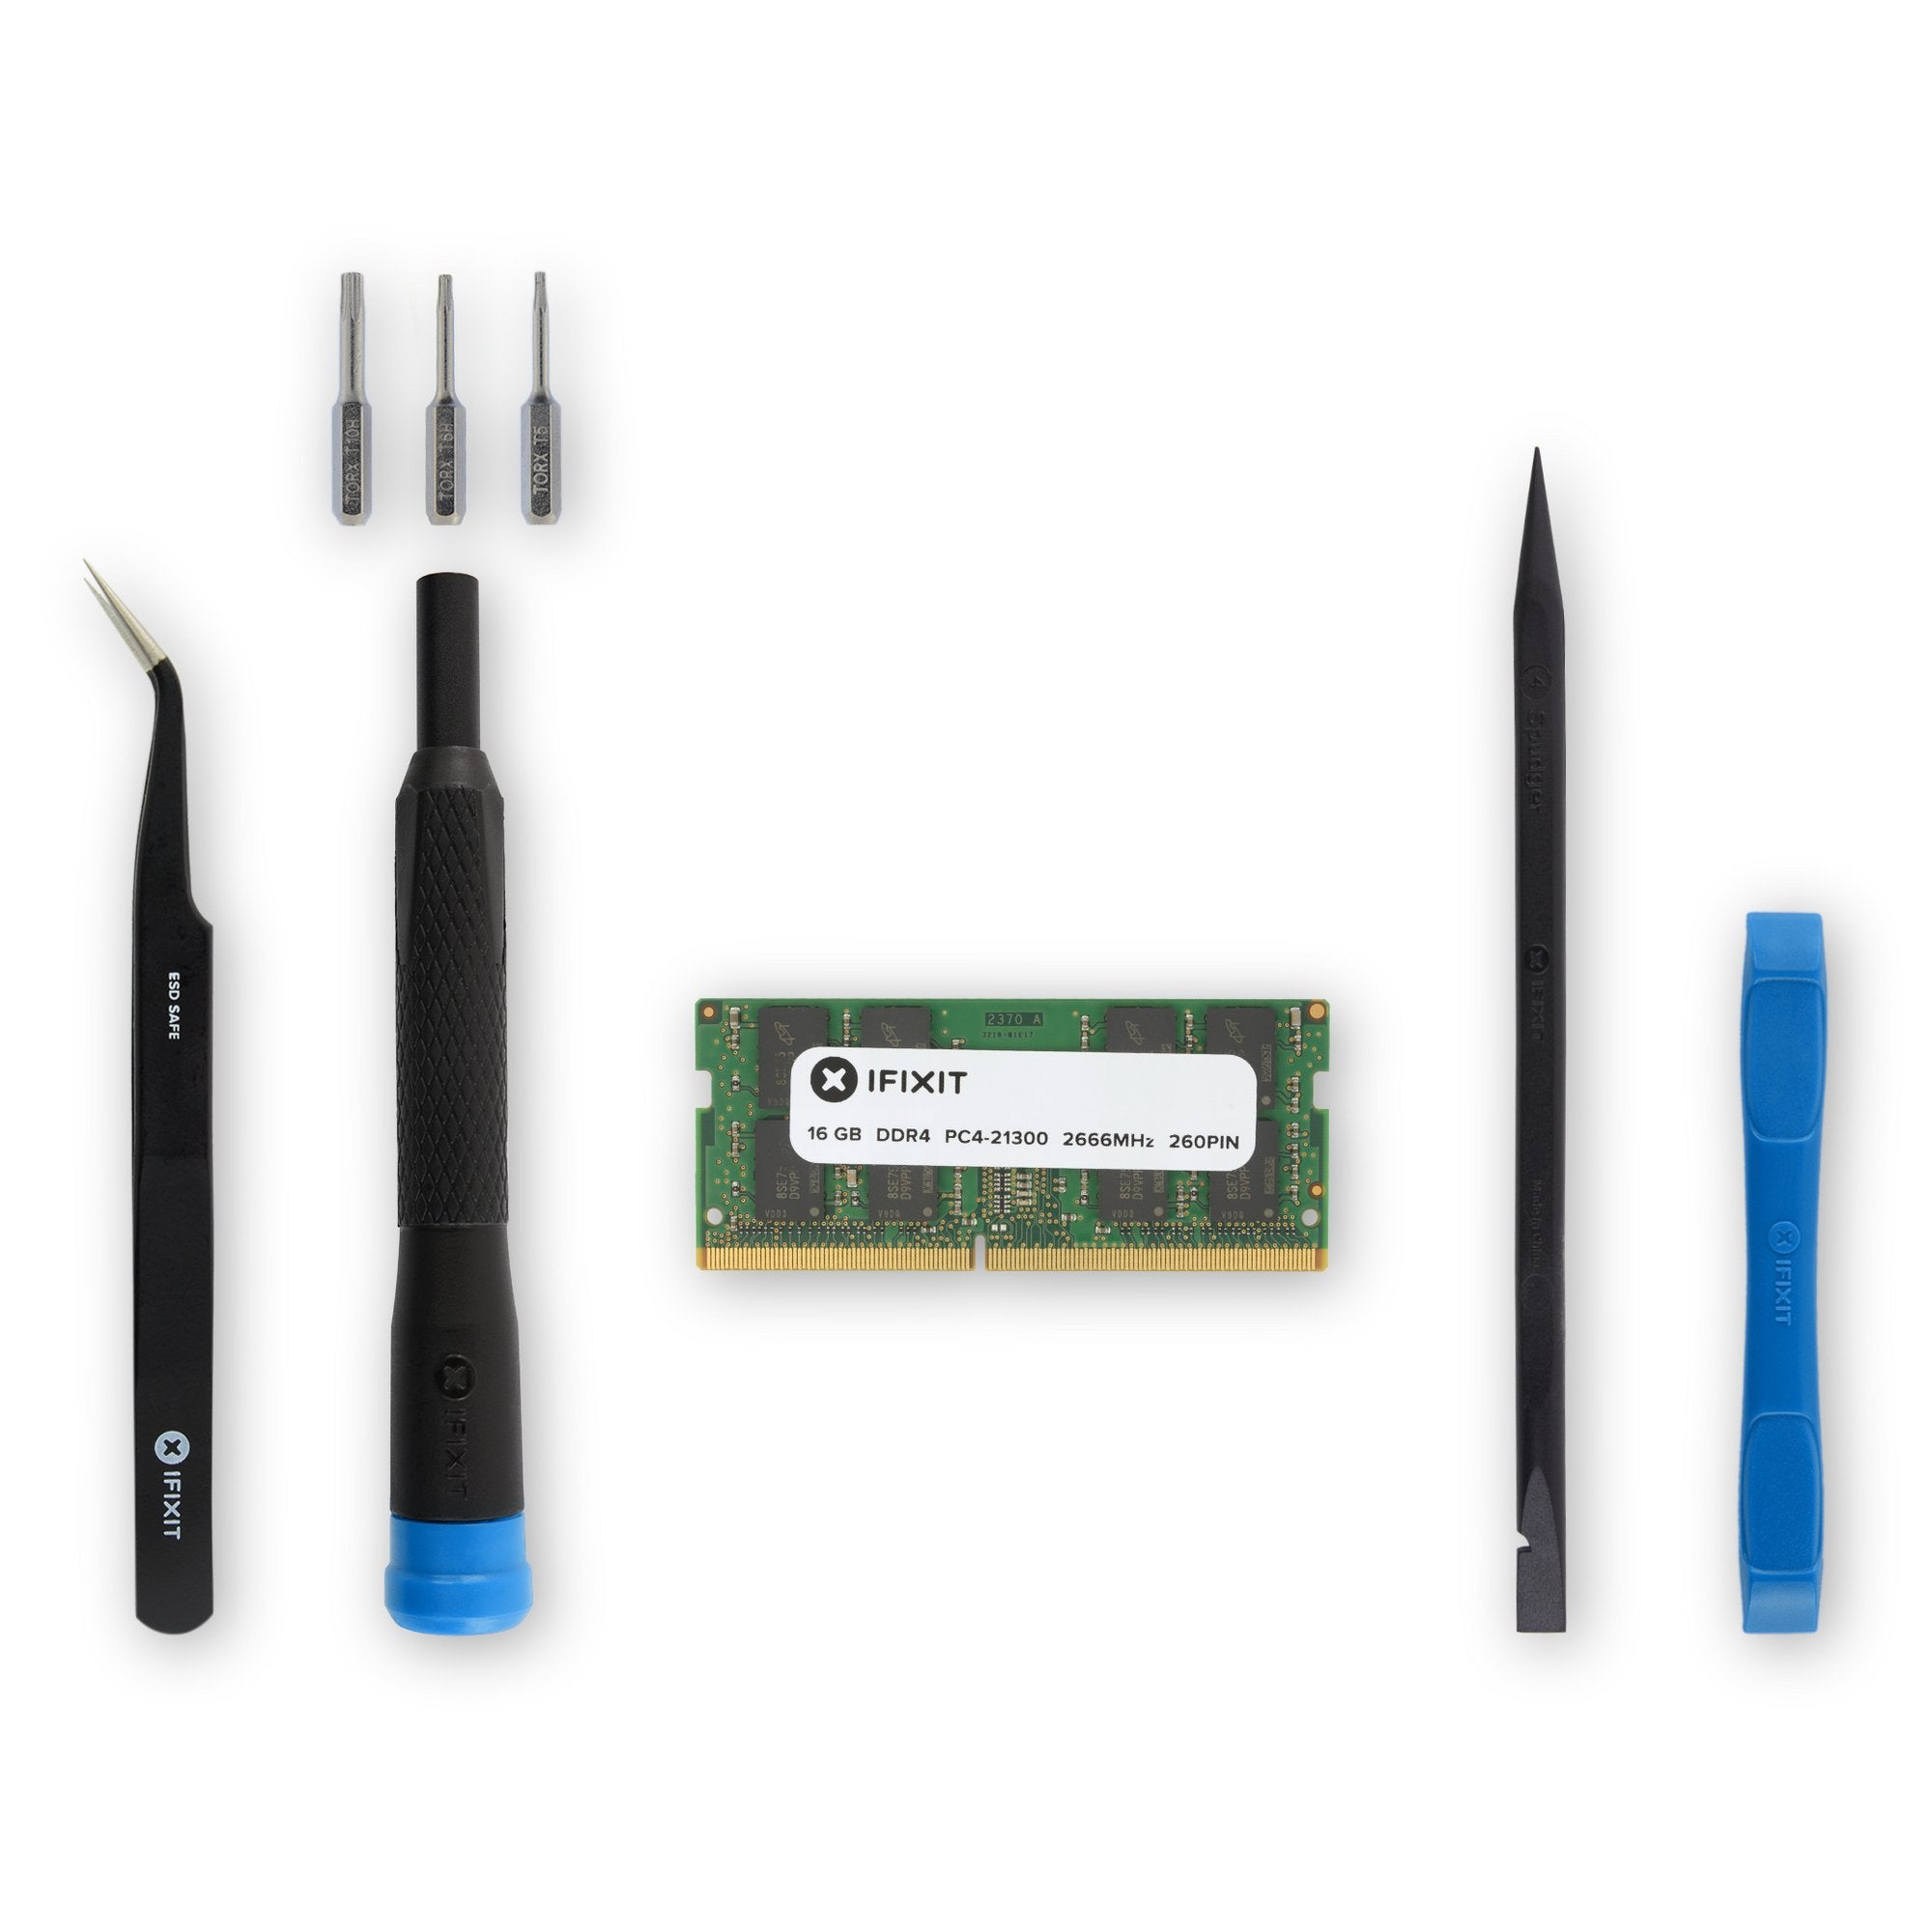 Mac mini Late 2018 Memory Maxxer RAM Upgrade Kit New 16 GB